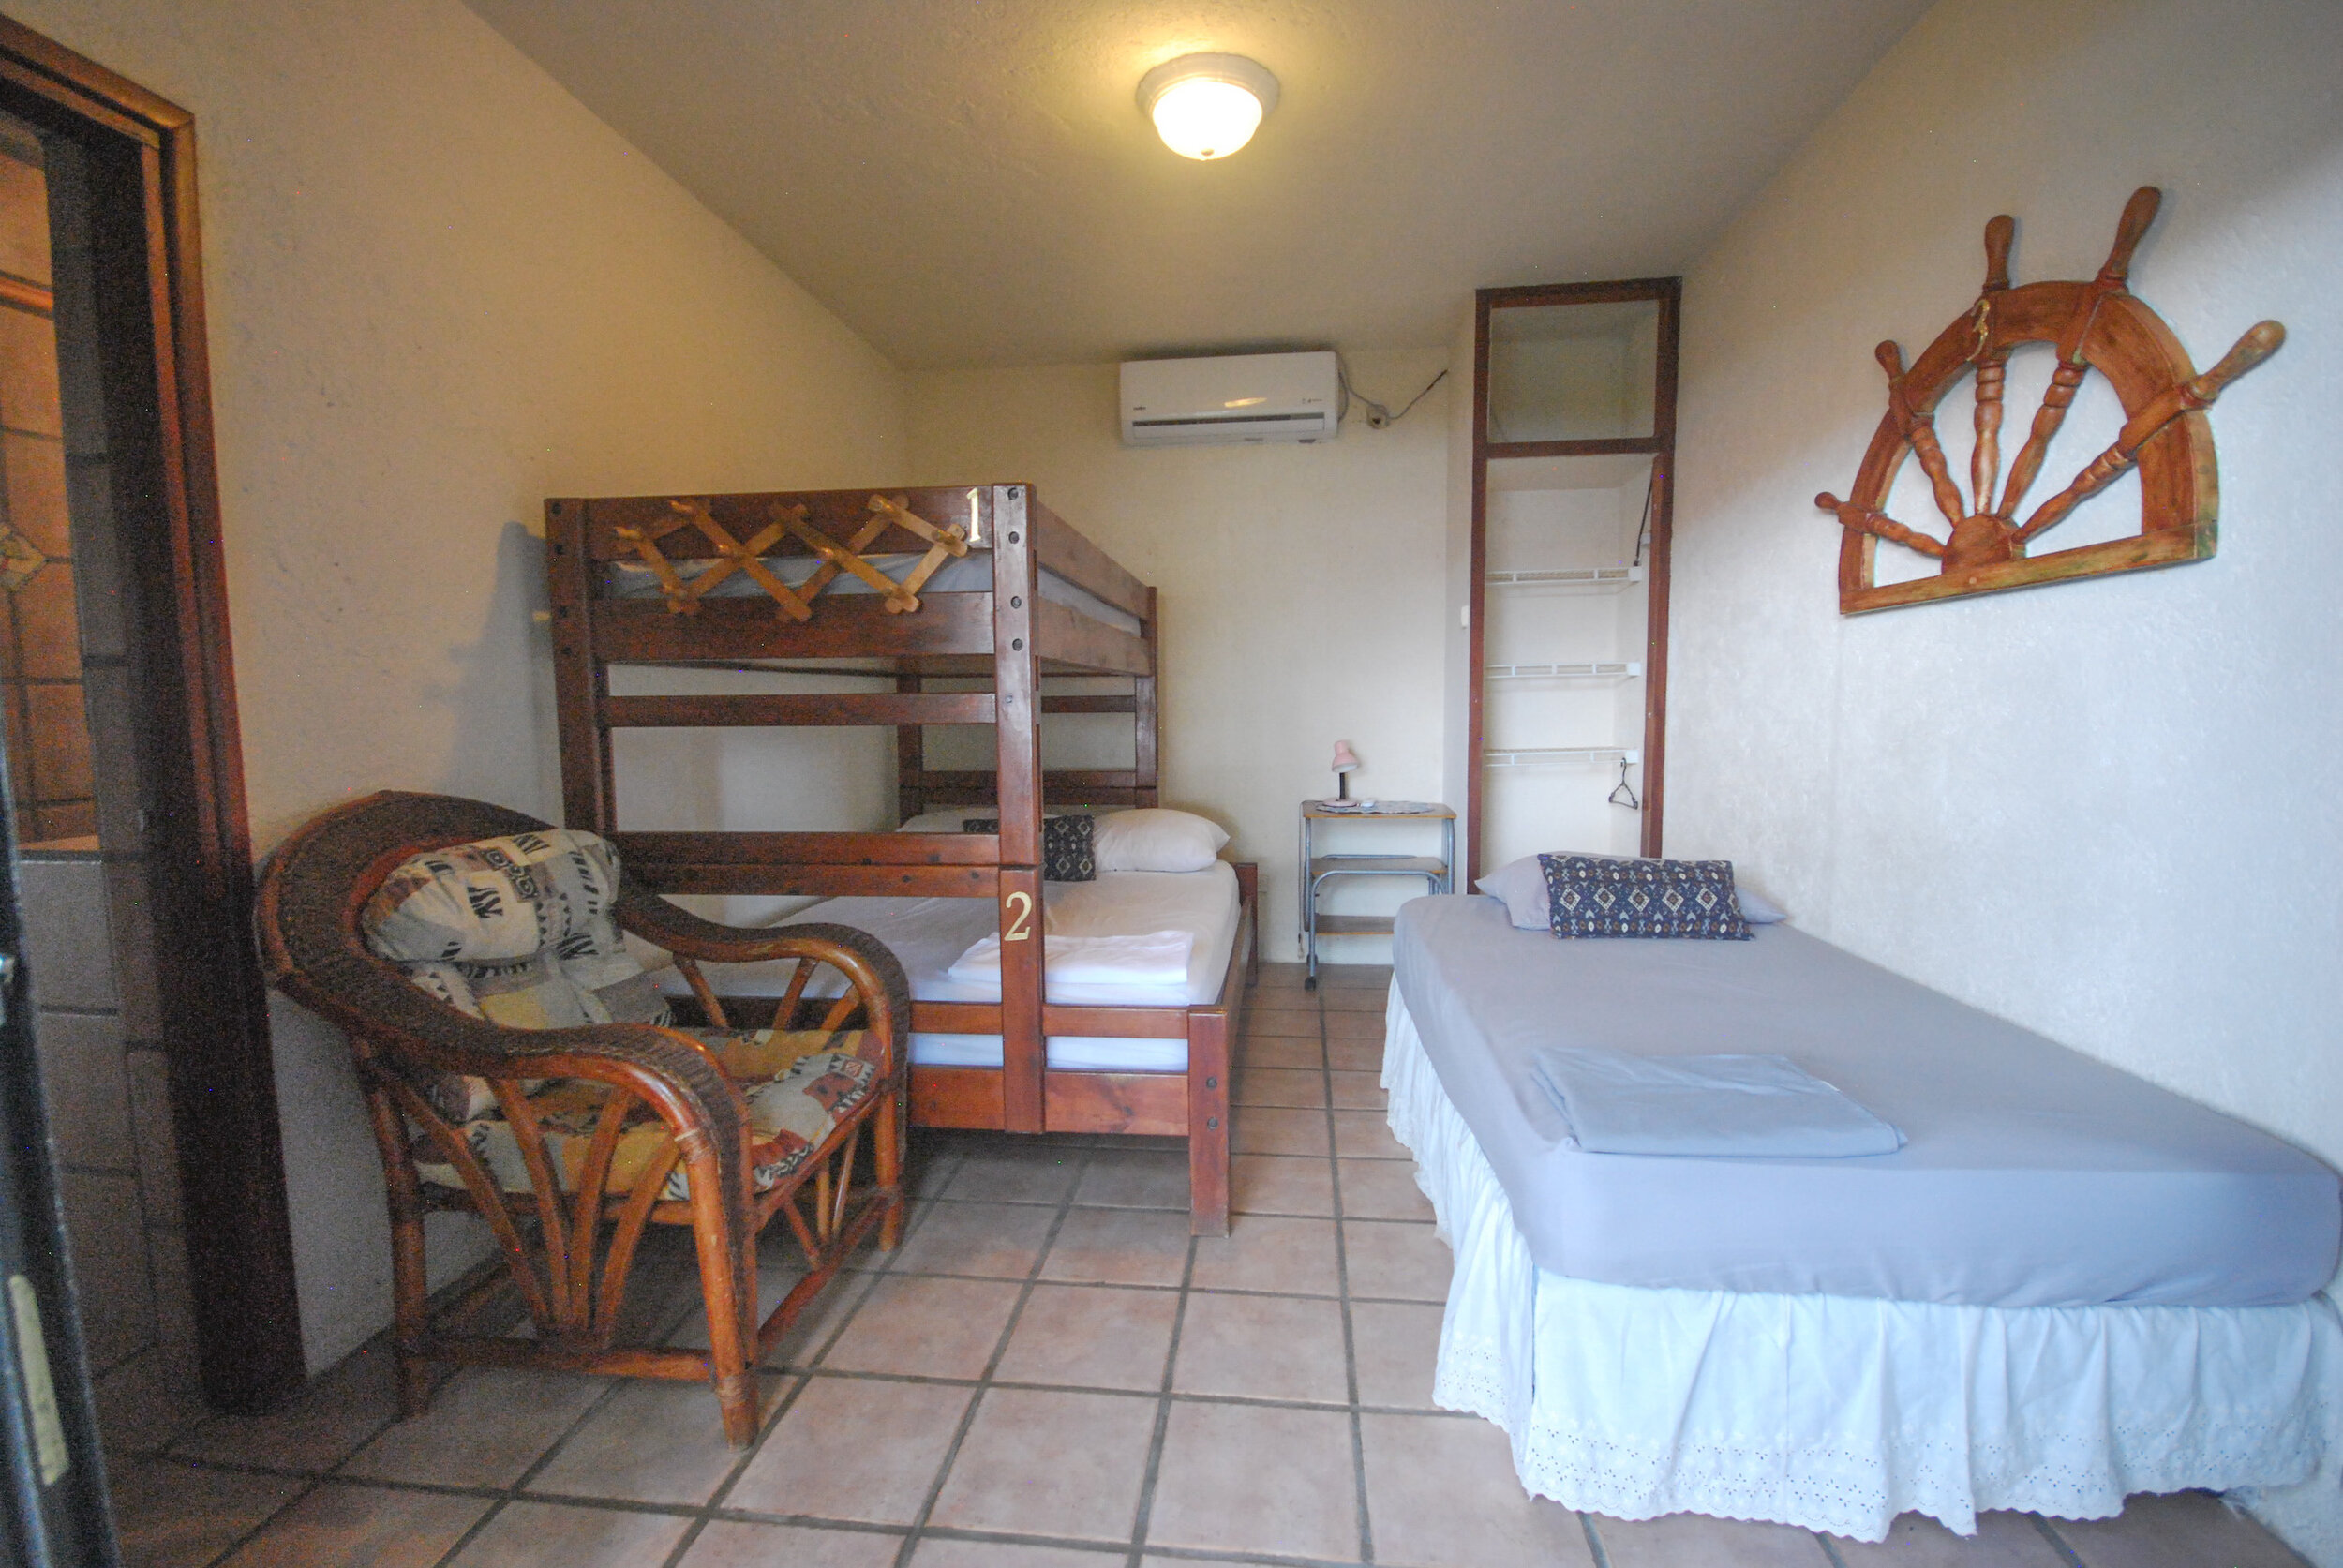 Hotel Resort For Sale San Juan Del Sur Nicaragua 10.JPEG